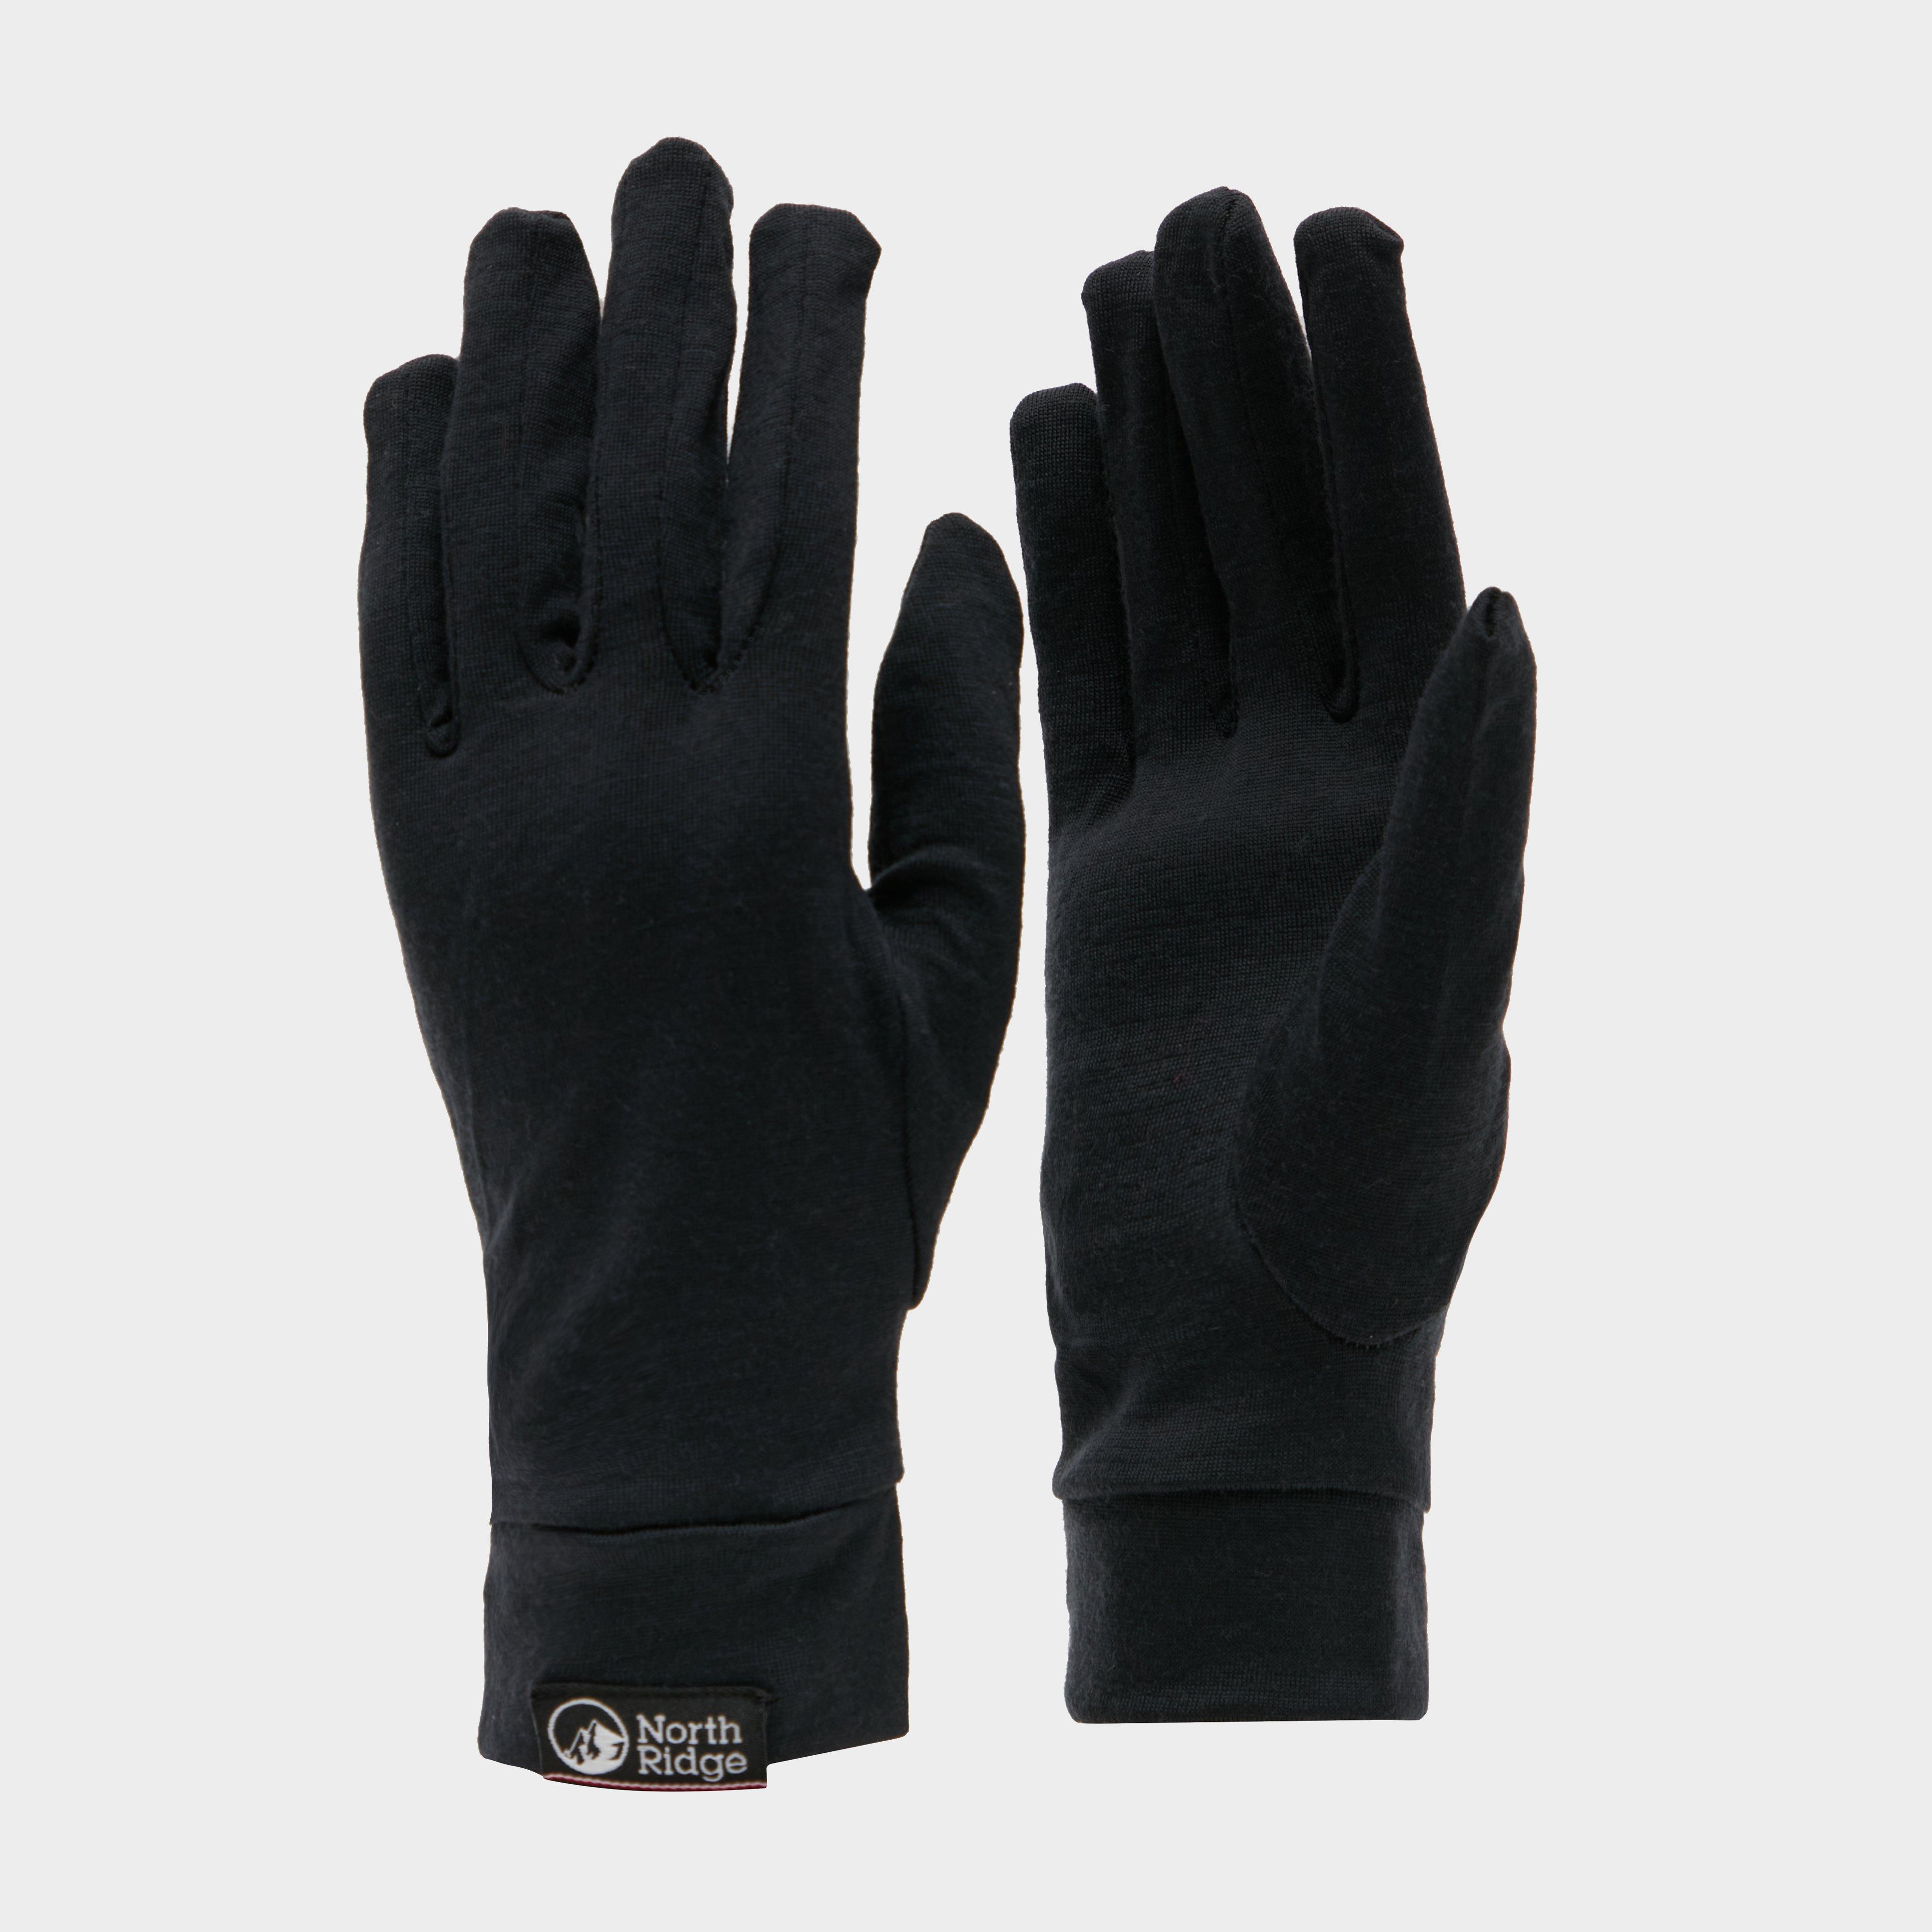 North Ridge Convect Merino Gloves - Black/gloves  Black/gloves